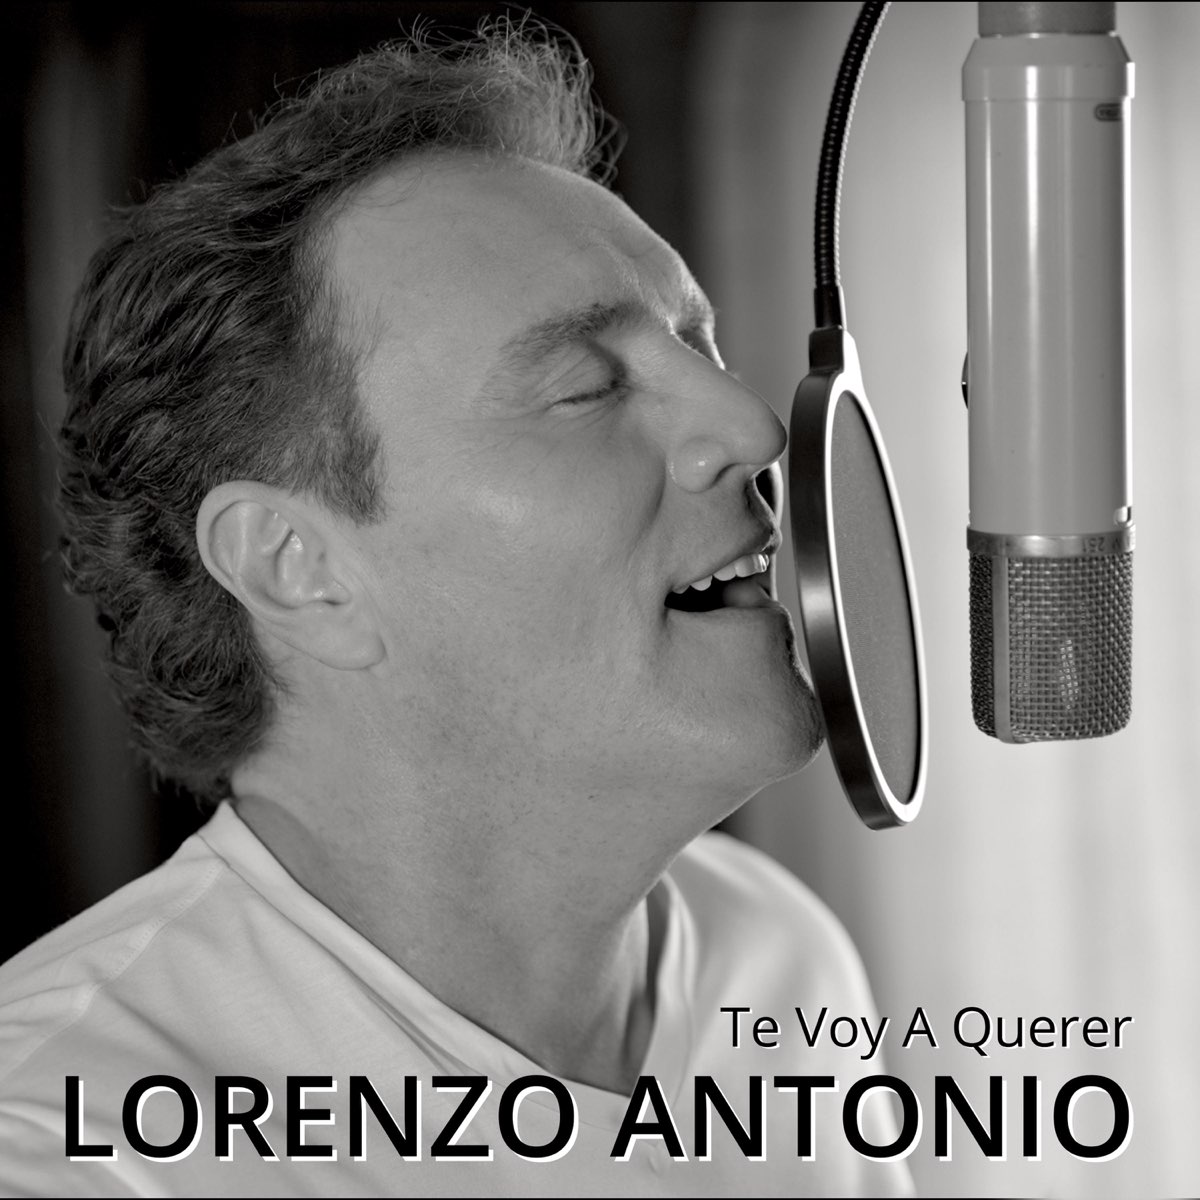 Te Voy a Querer - Single – Album av Lorenzo Antonio – Apple Music